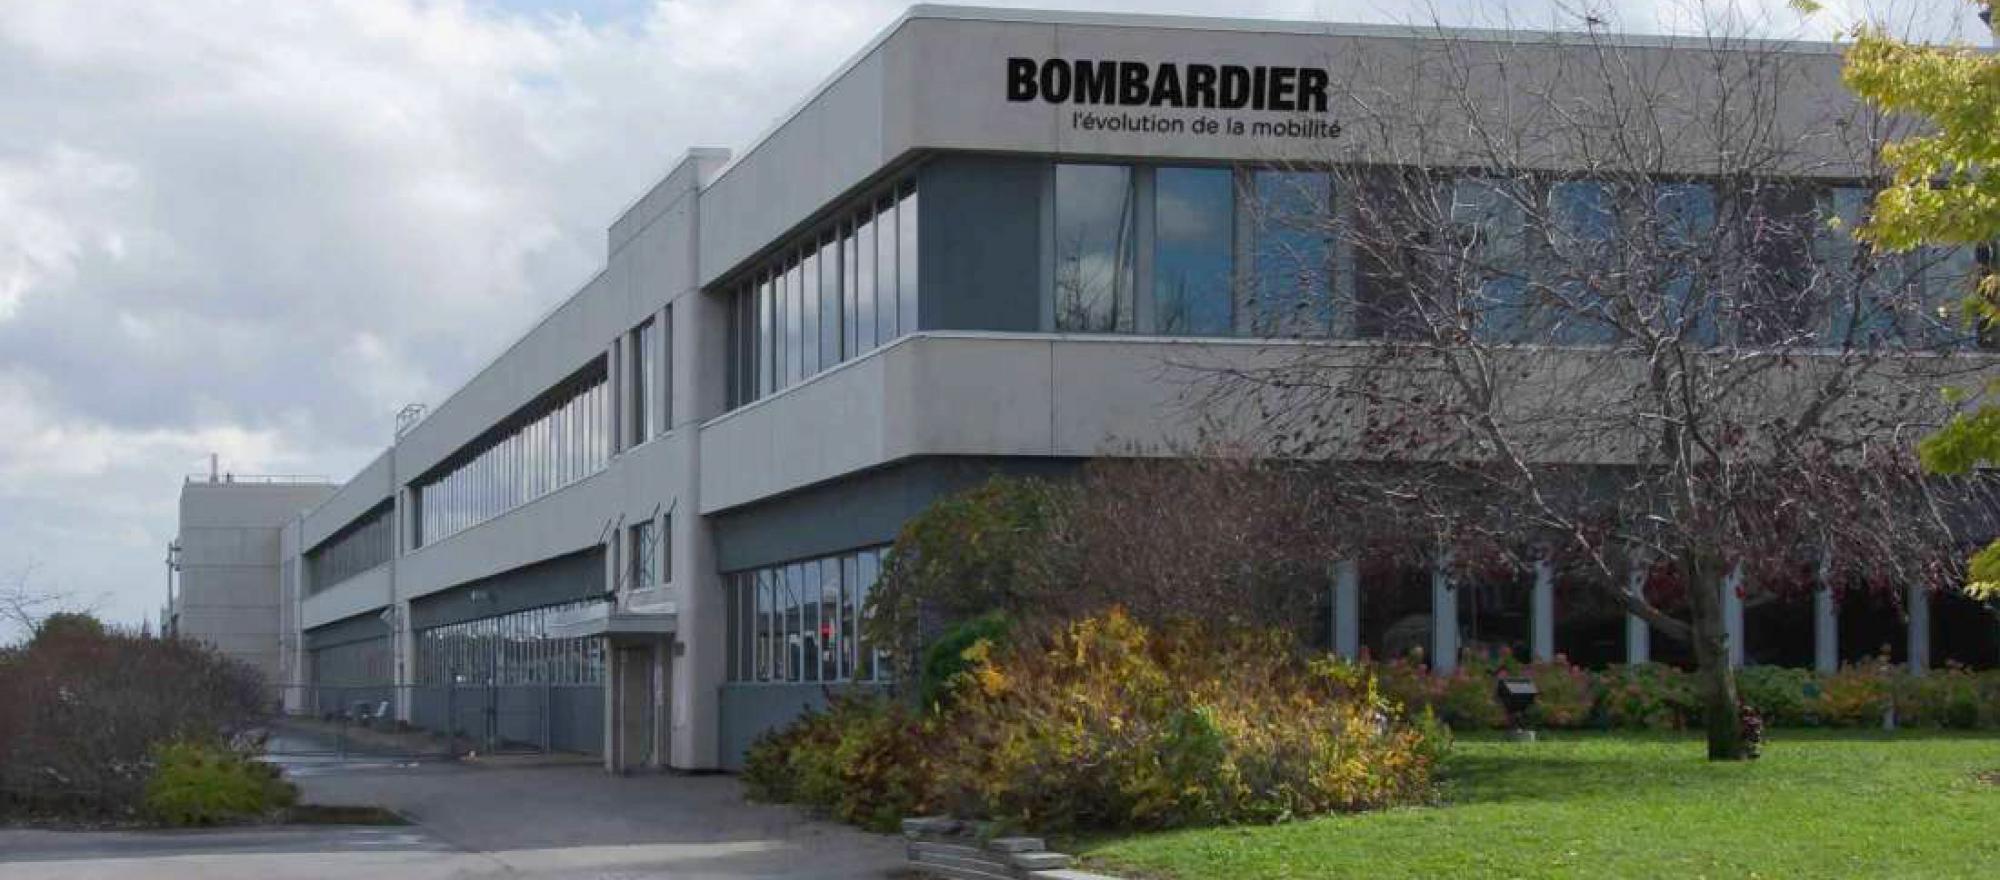 Bombardier facility Montreal, Canada